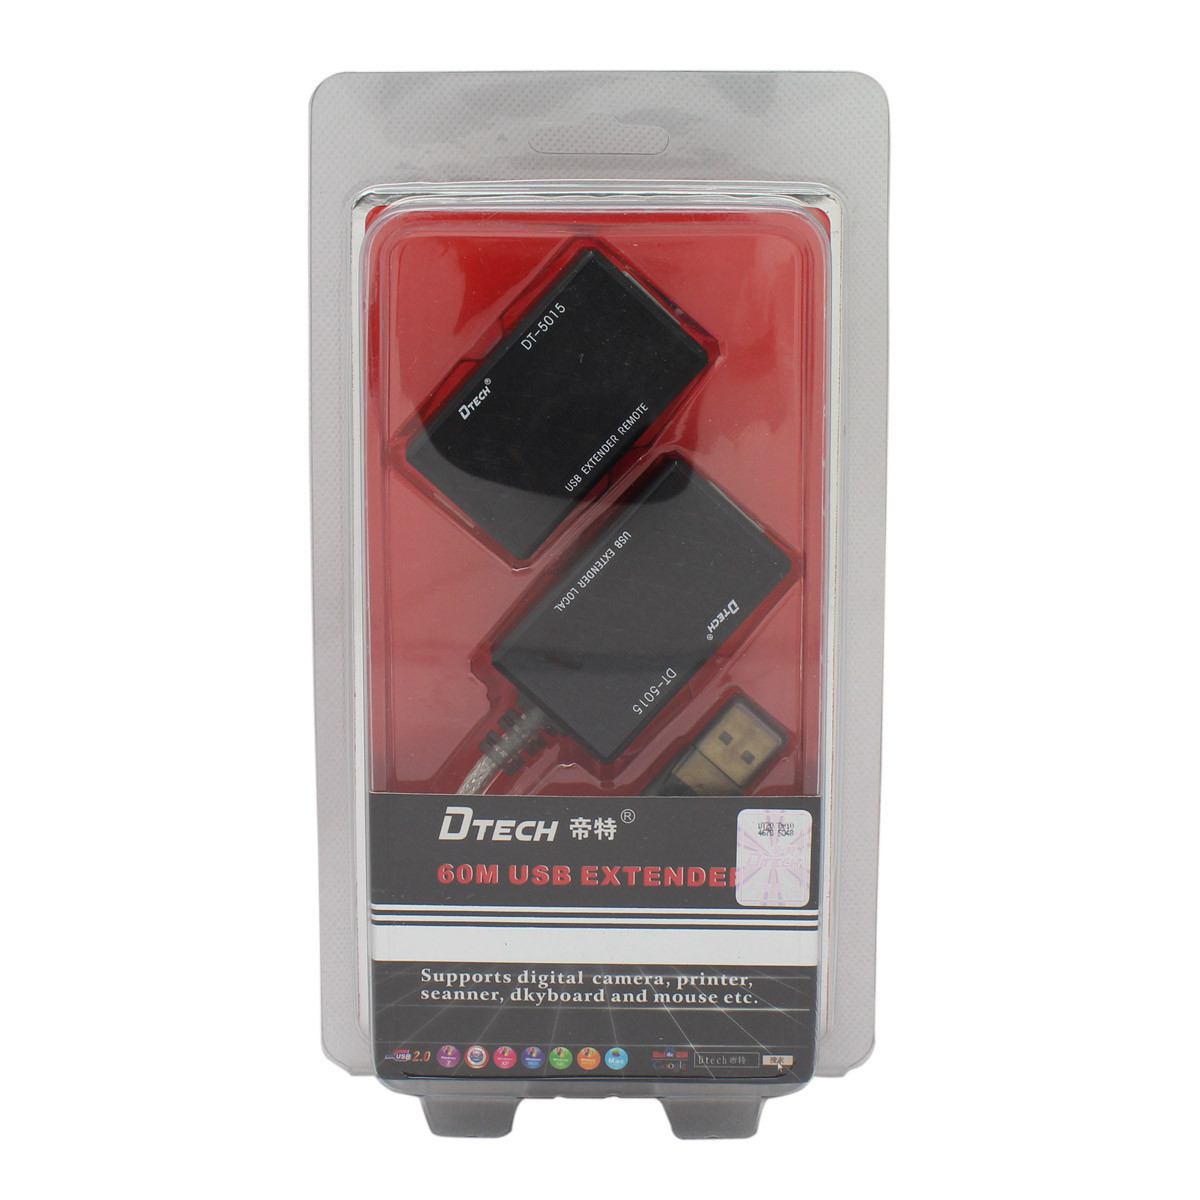 Dtech VGA 3+6  M/M HD CABLE （BLACK）